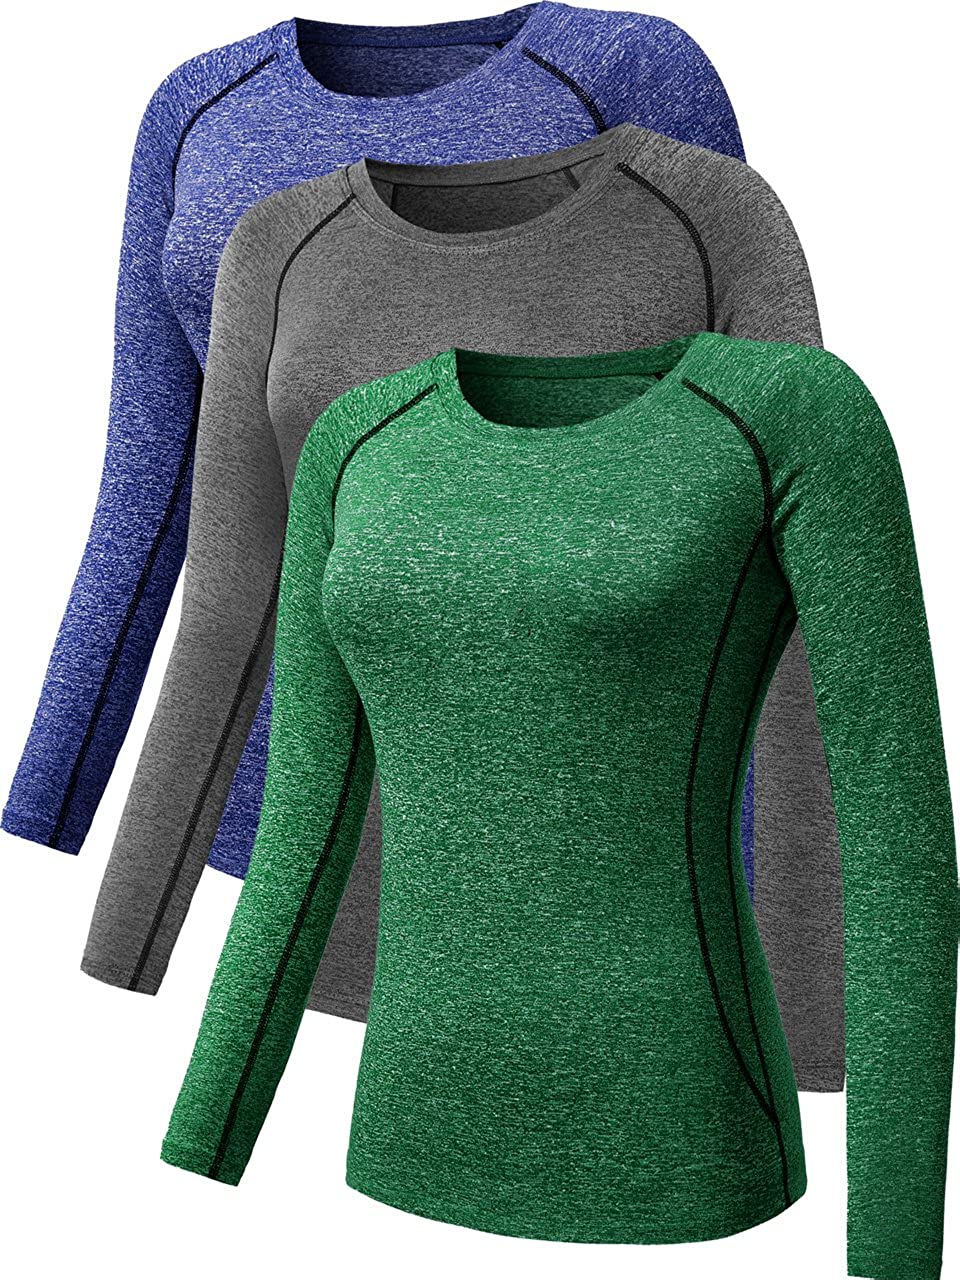 NELEUS Women's 3 Pack Compression Shirts Long Sleeve Yoga Athletic